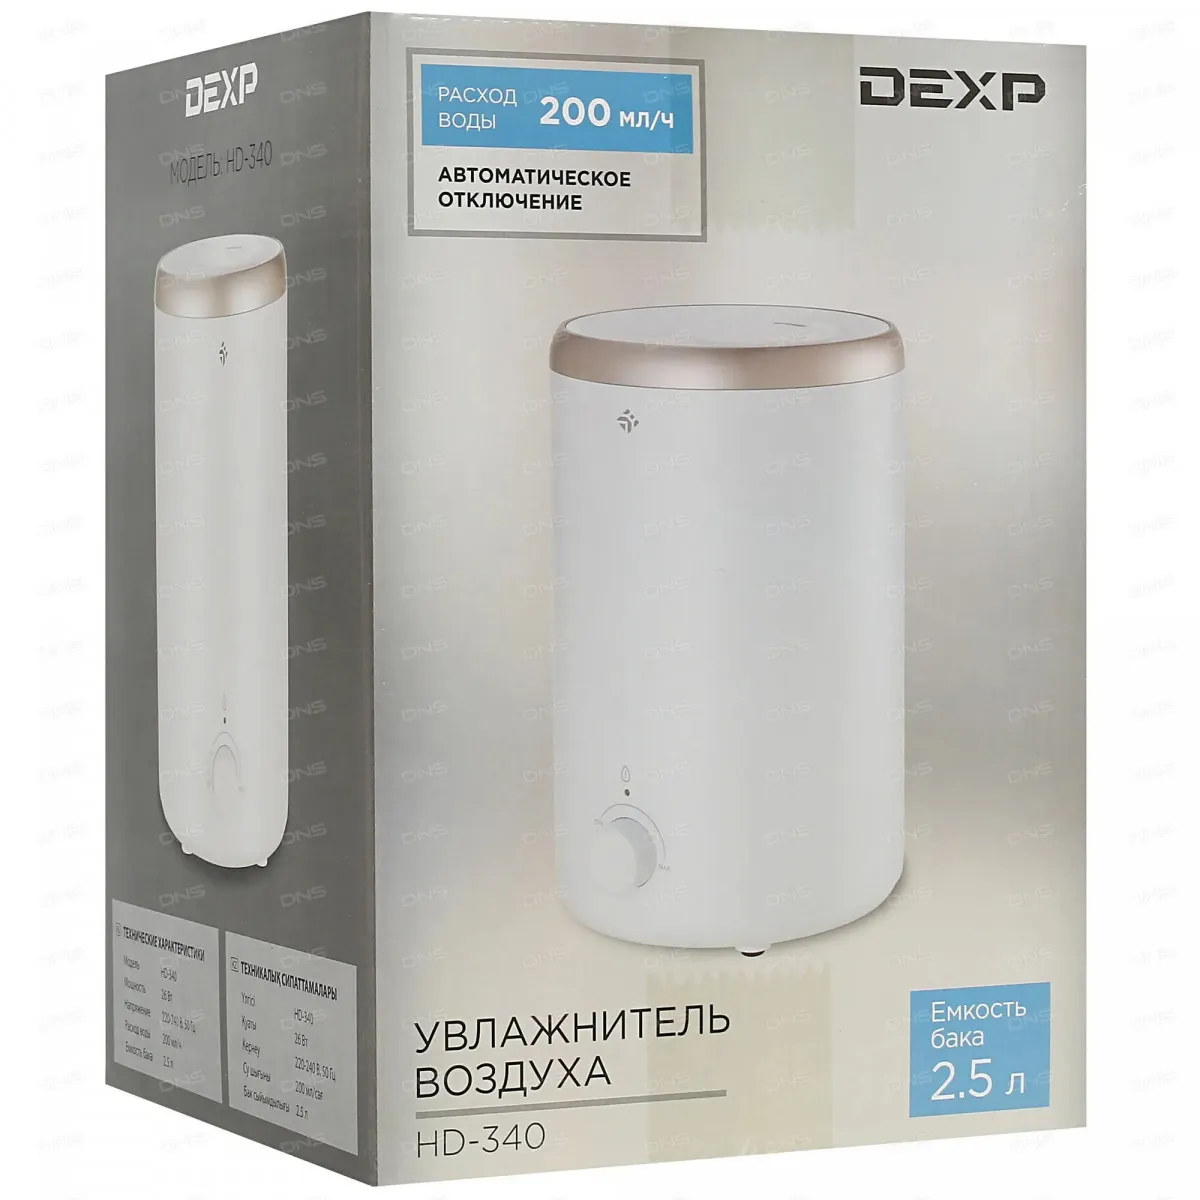 DEXP HD-340 namlagich#4